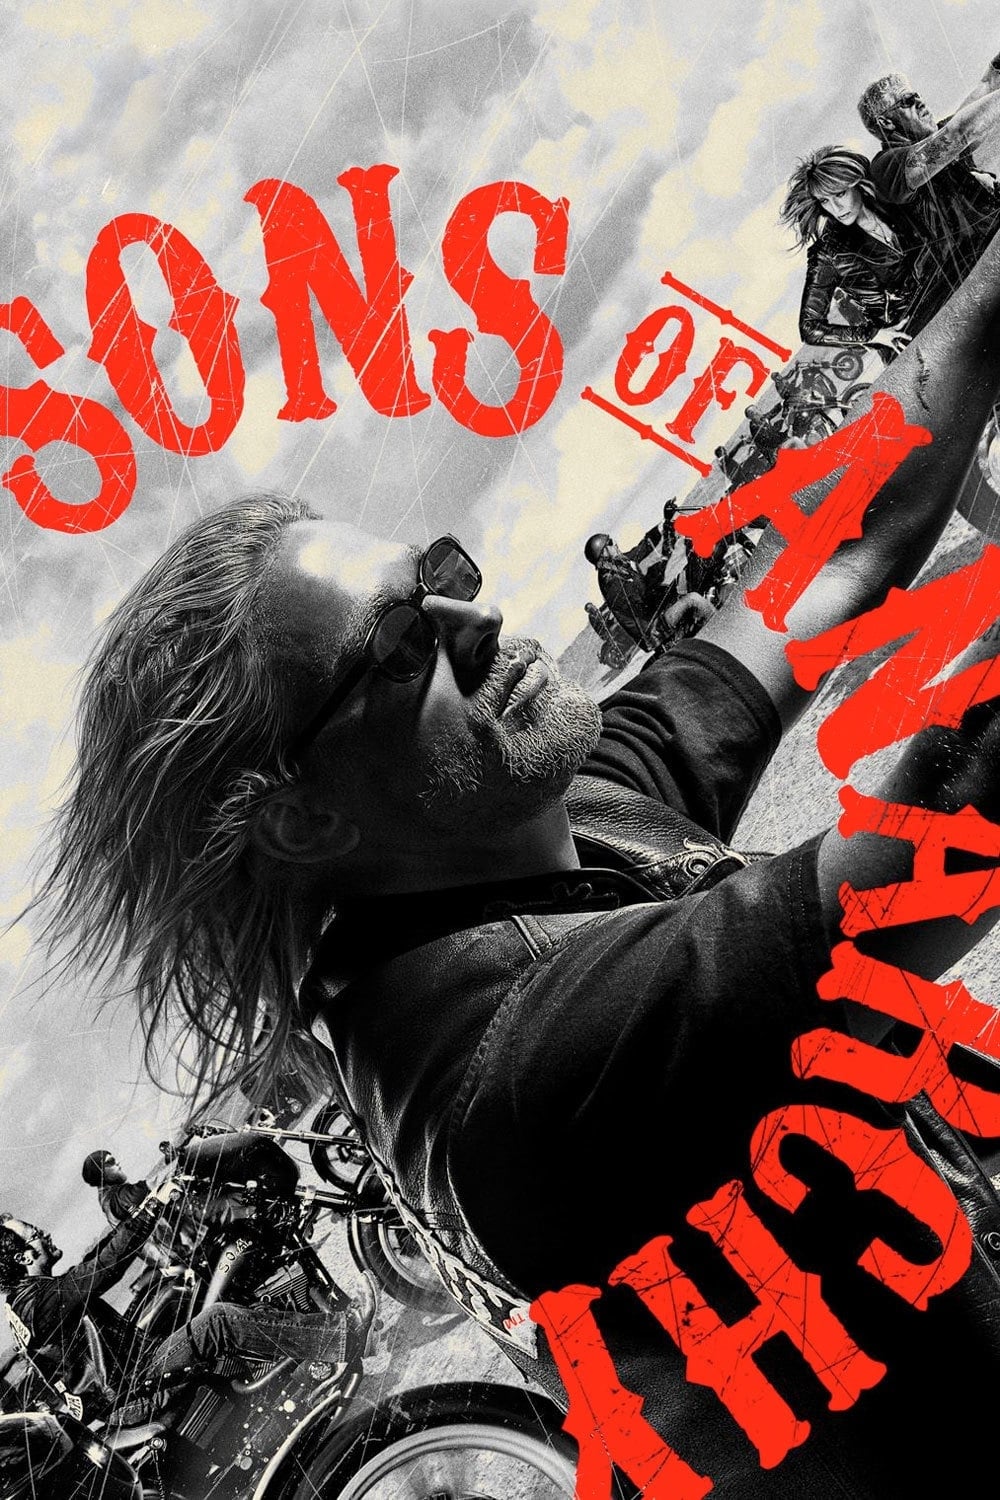 Sons of Anarchy (2008 - 2014) Seizoen 5 Disc 3 BD50